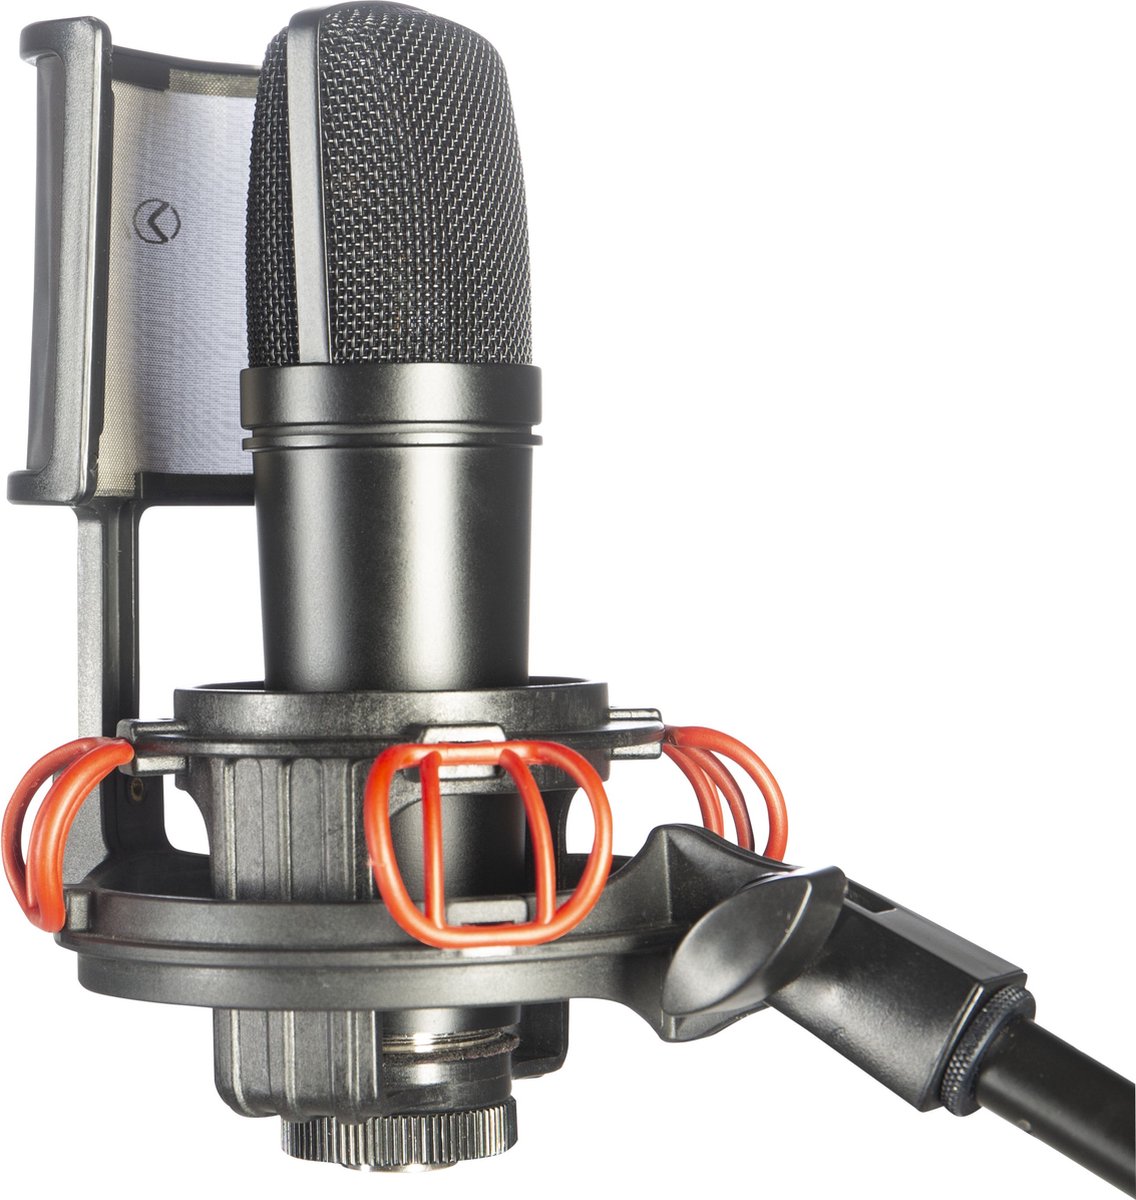 Fame Audio Vocal Kit - Grootmembraan condensator microfoons